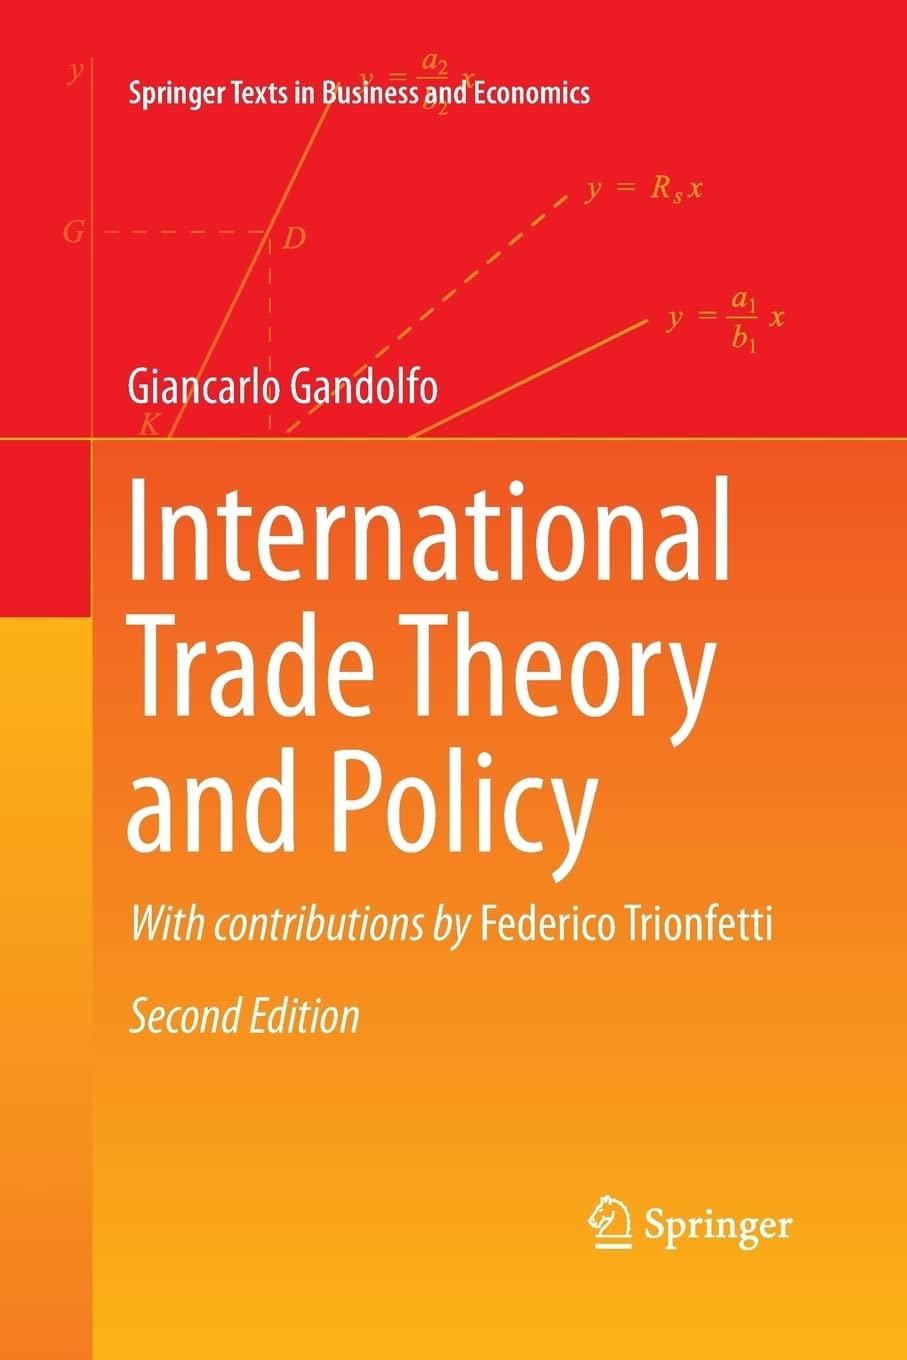 international trade theory and policy 1st edition giancarlo gandolfo, federico trionfetti 3642433979,